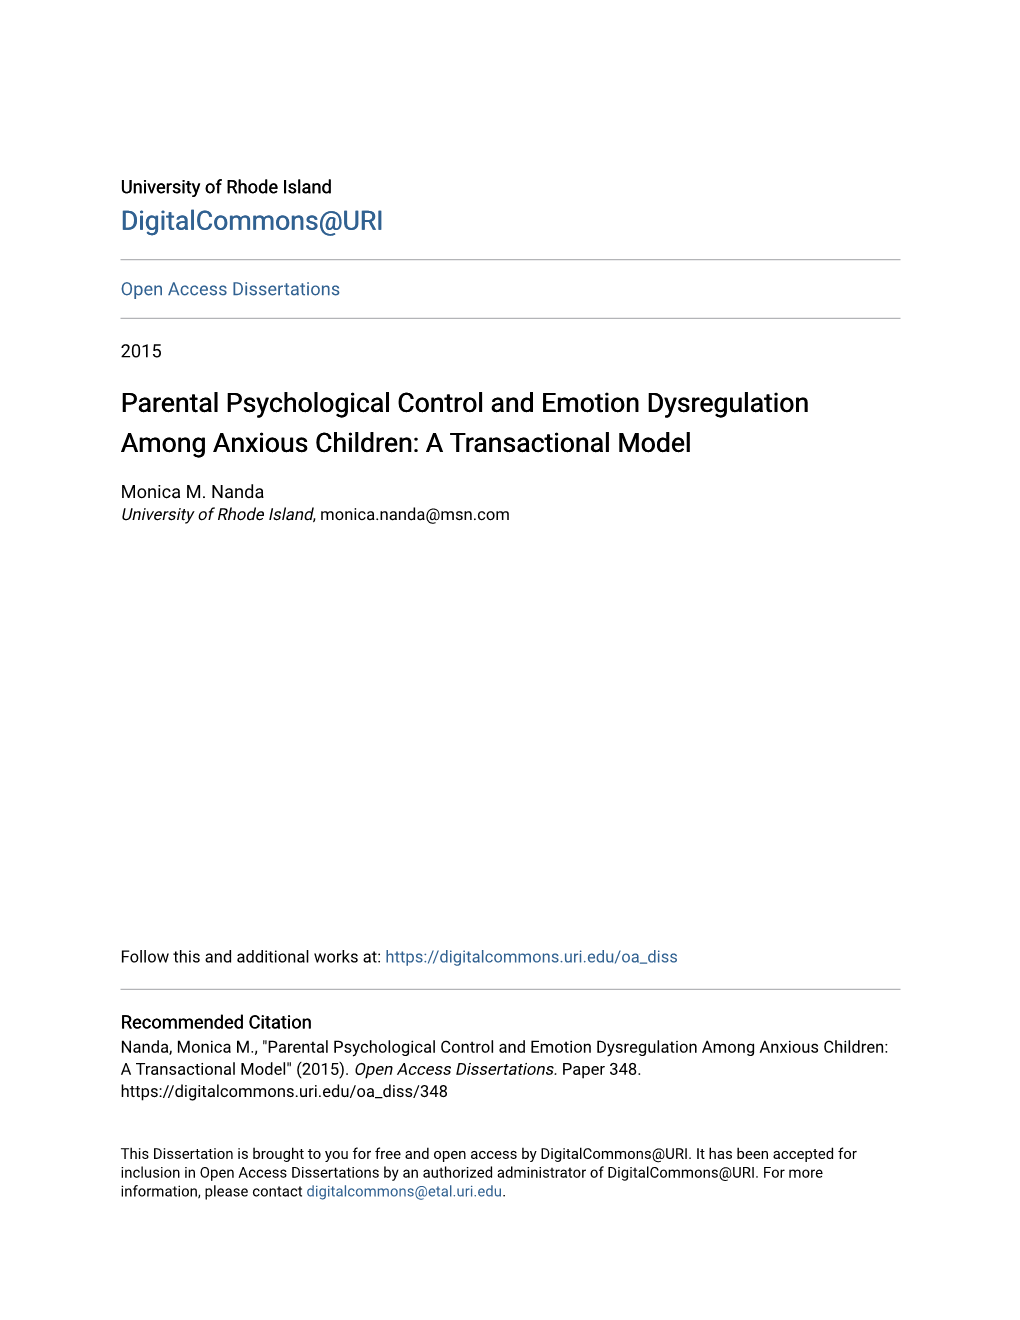 Parental Psychological Control and Emotion Dysregulation Among Anxious Children: a Transactional Model